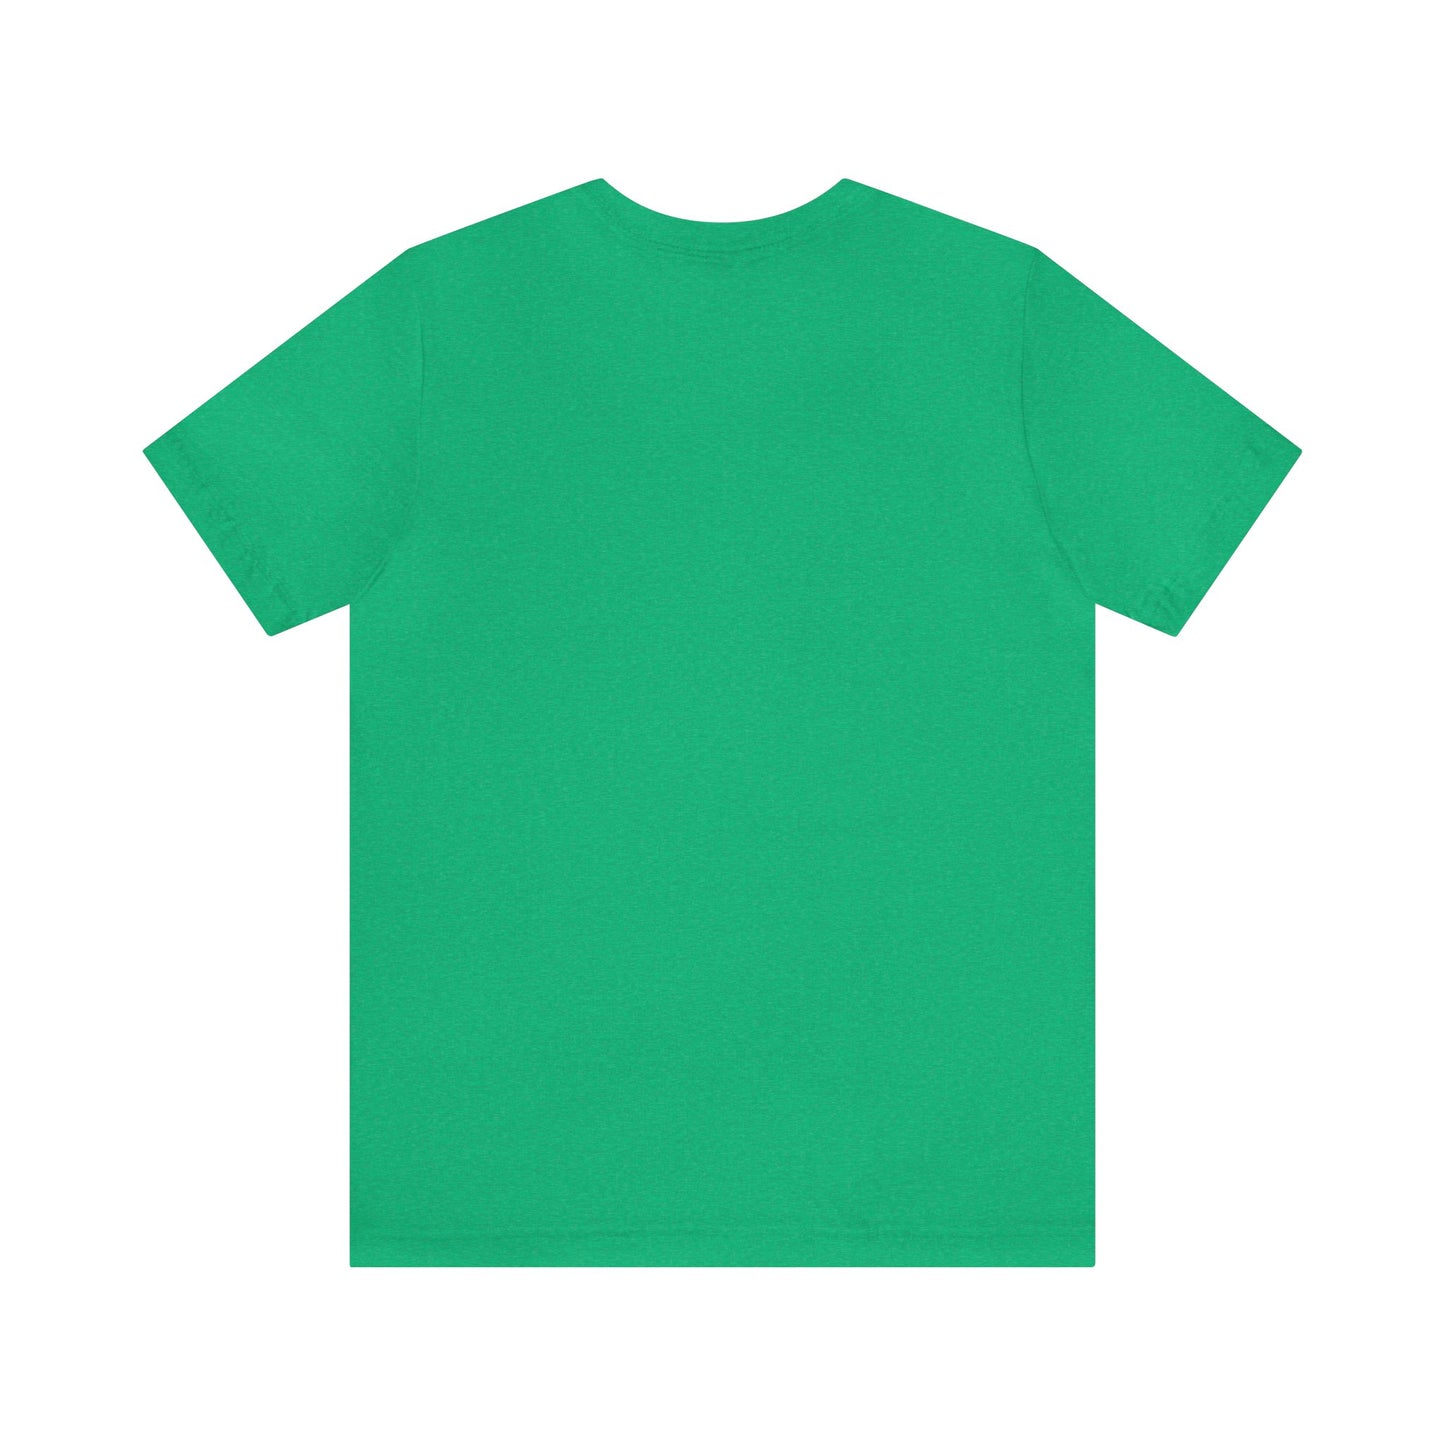 Who Needs Lucky I have Charm St Patrick's Day shirt Clover Shirt Irish Shirt